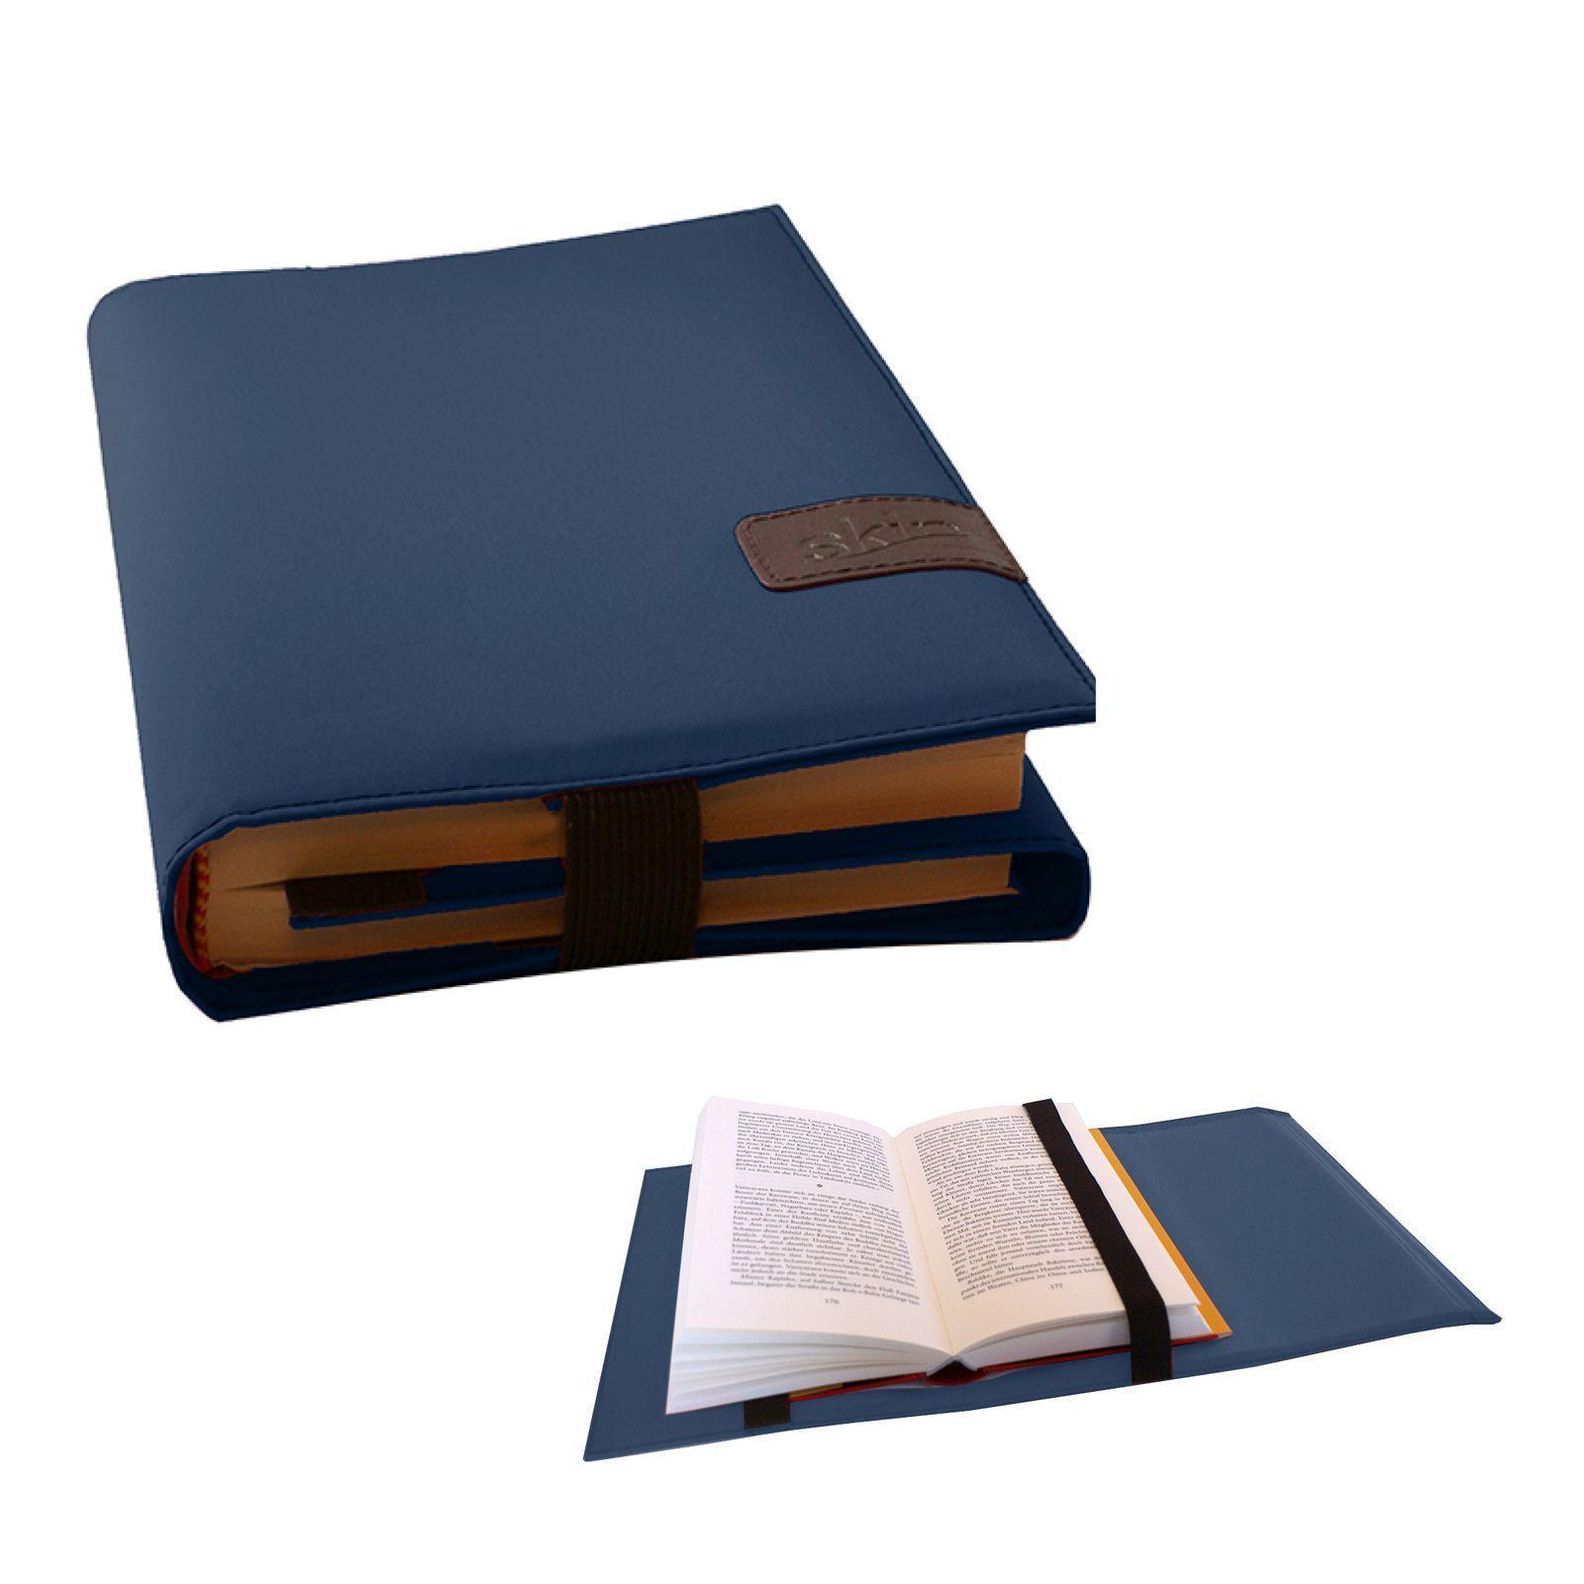 BookSkin Multifunktionshülle marine-blau, Buchhülle | Weltbild.de